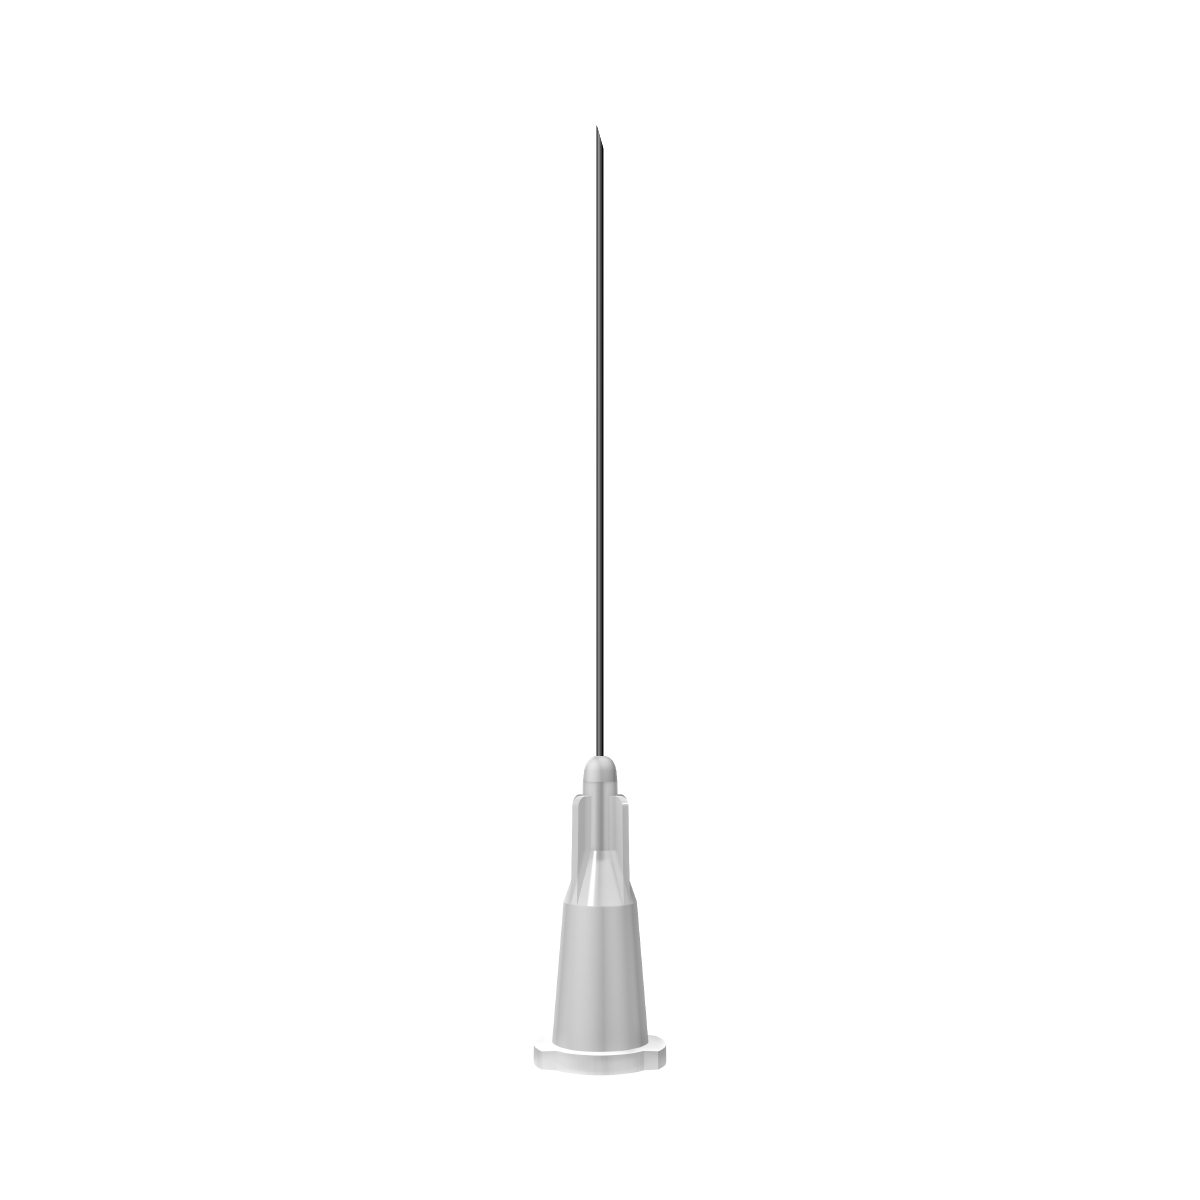 BBraun: Grey 27G 40mm (1½  inch) needle 